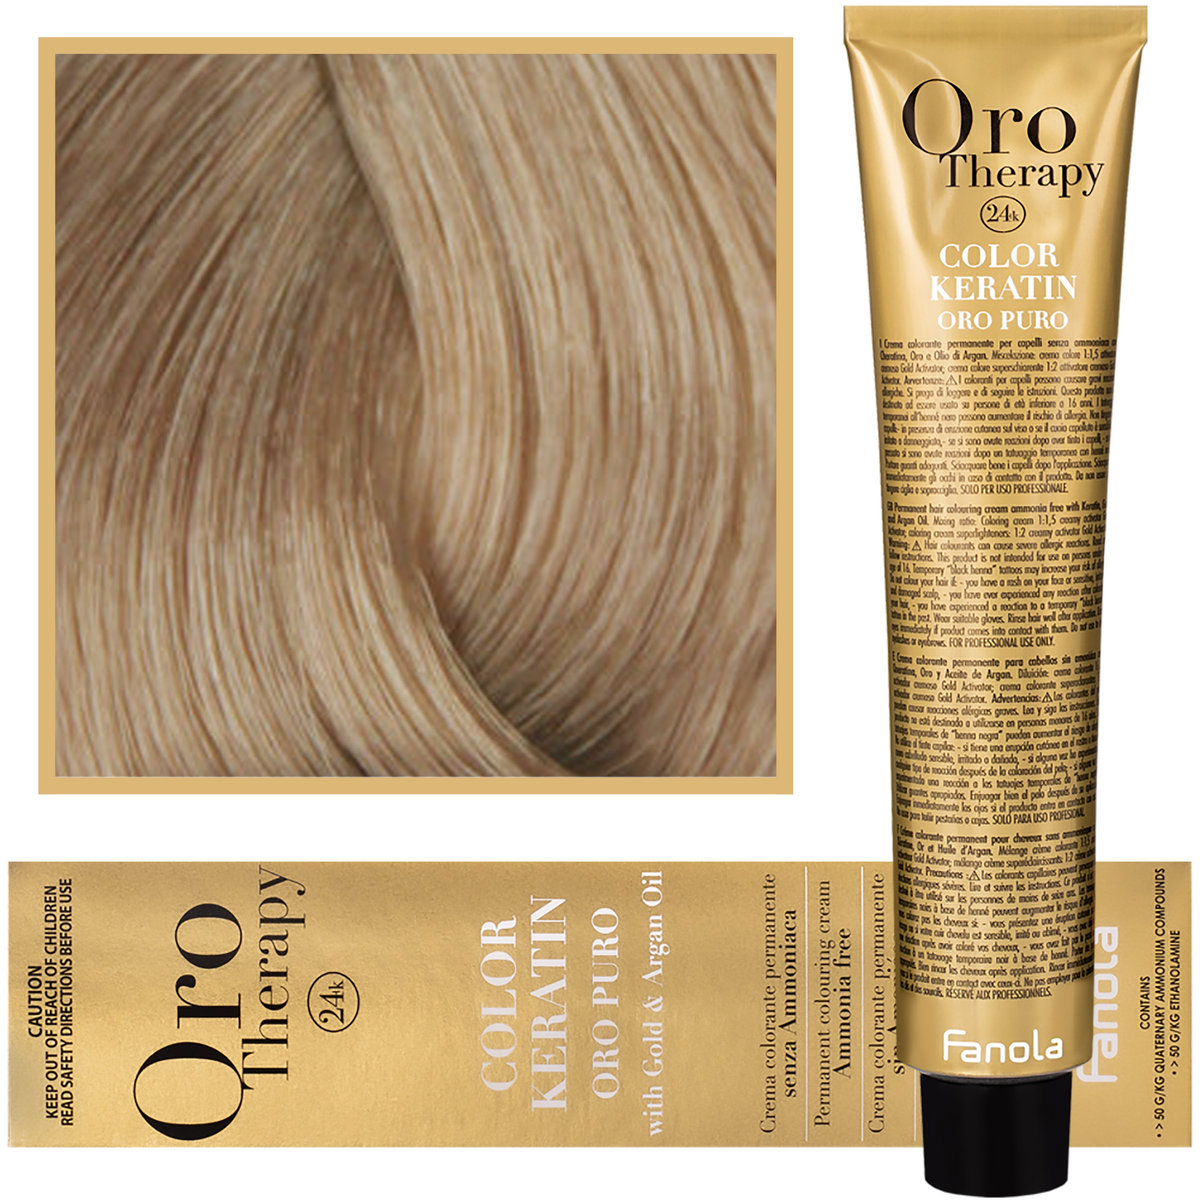 Fanola Oro Puro Therapy Color Keratin 100 ML 10.00 blond Platyna Extra 10.